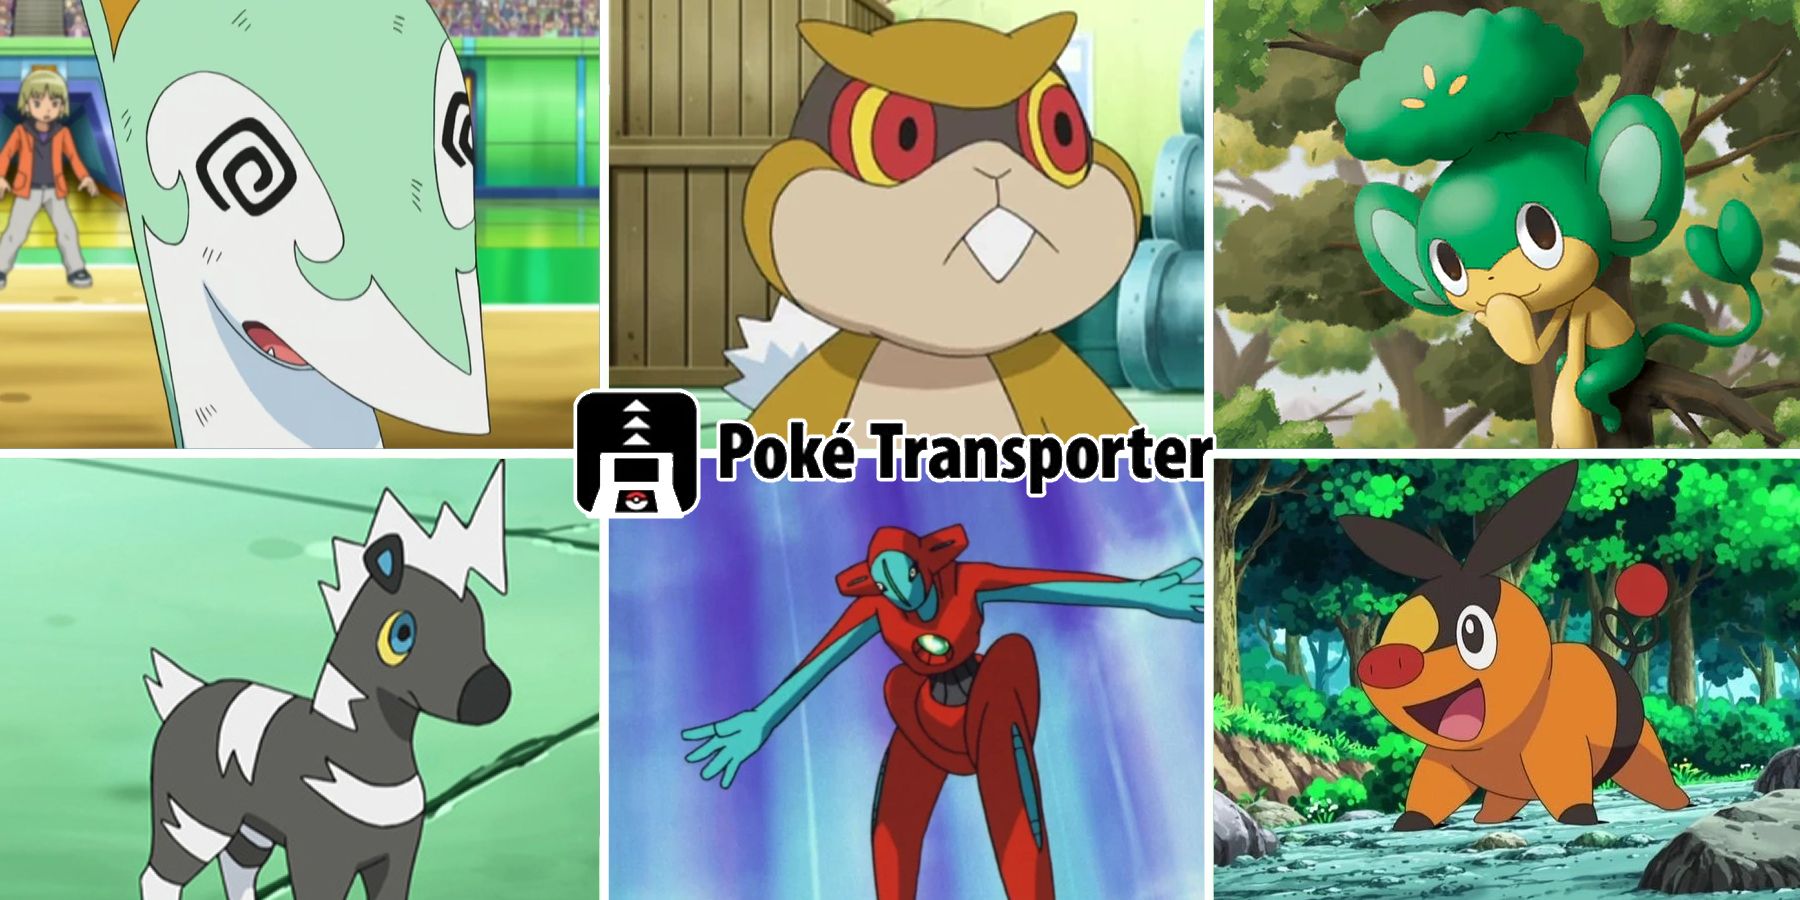 Some Pokemon Fans Can’t Use Poke Transporter